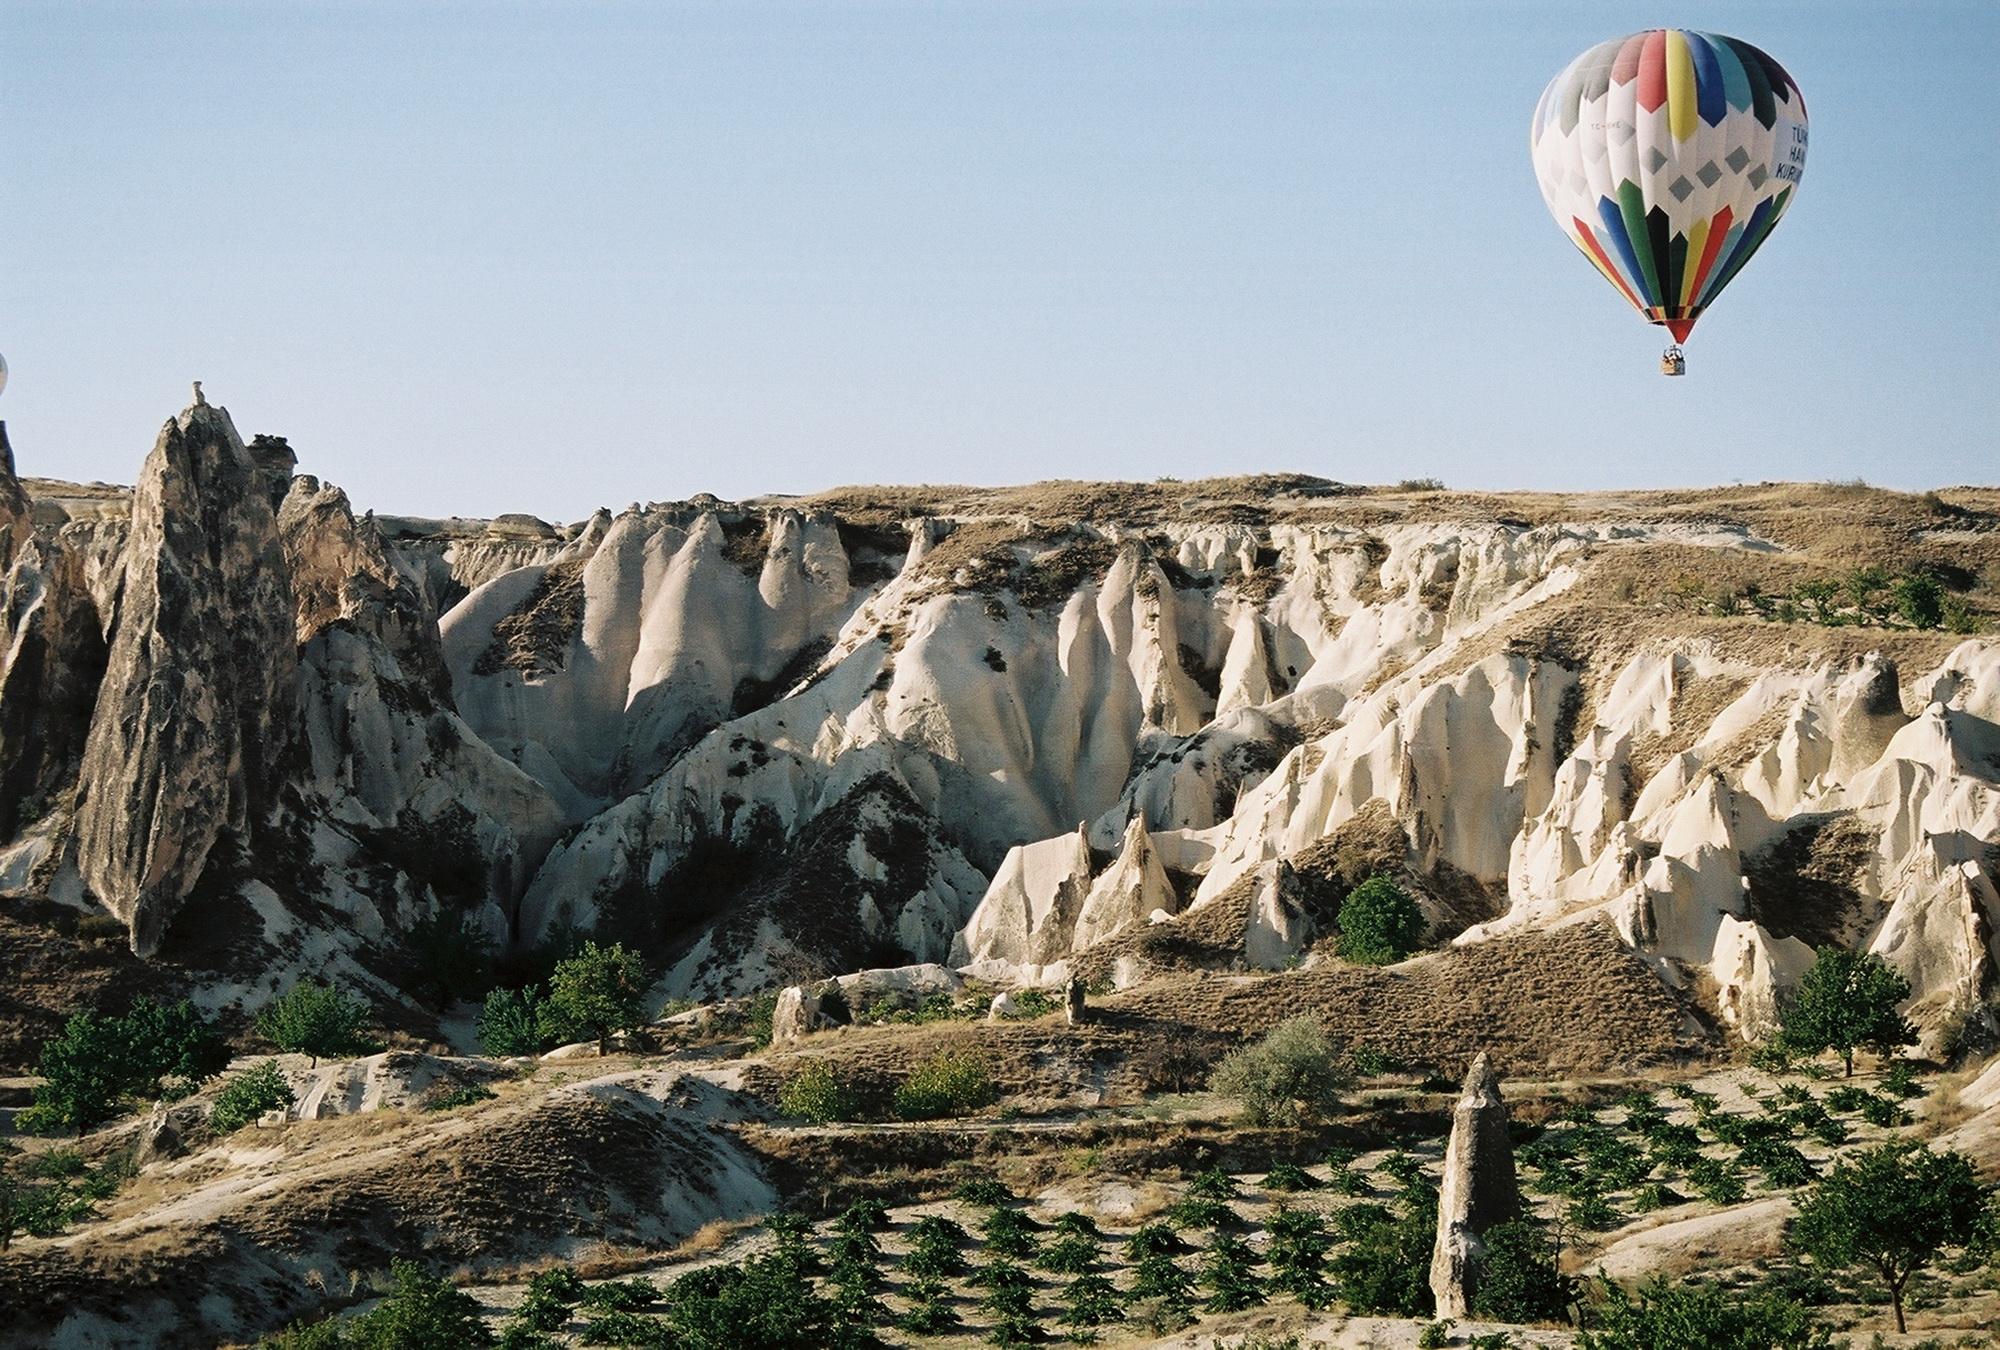 H. Allen Benowitz Landscape Photograph – Ballon über Cappadocia- Landschaftsfotografie